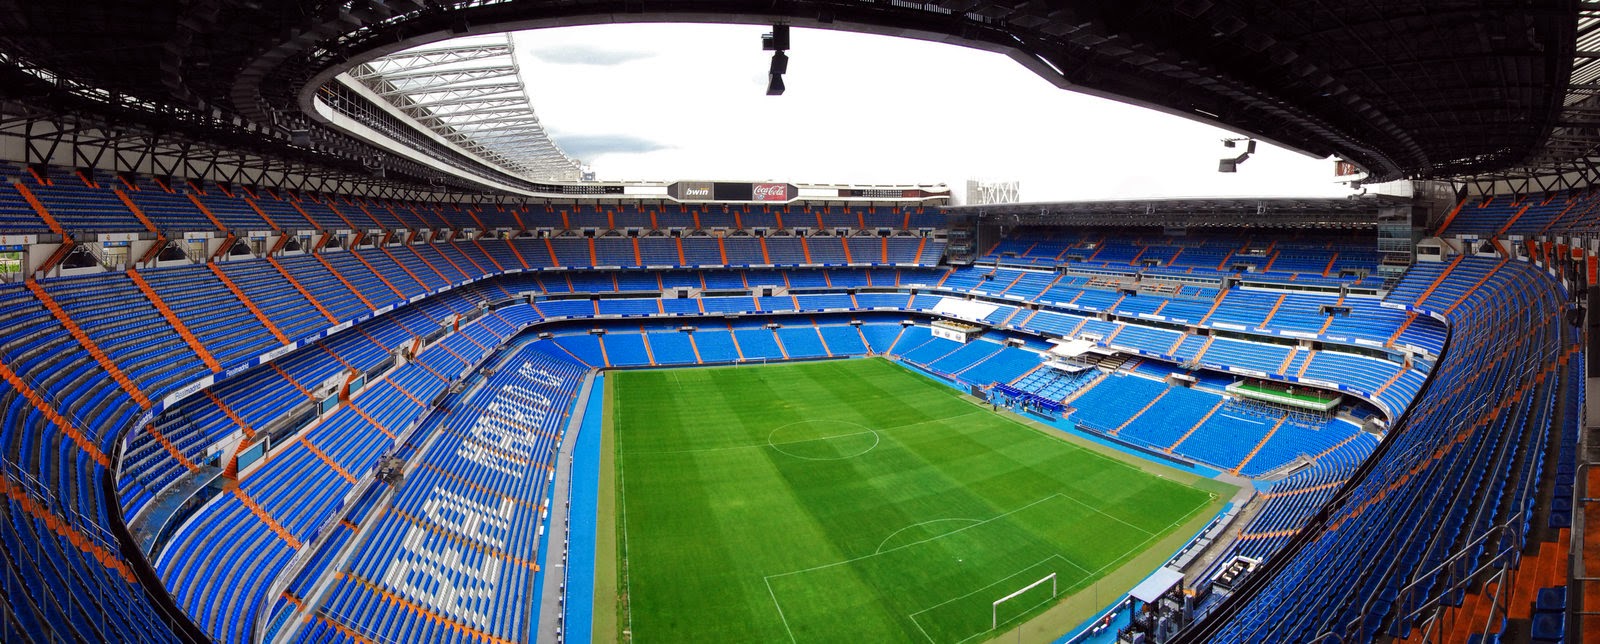 Santiago_Bernabeu_Stadium_by_sparklesofadewdrop.jpg